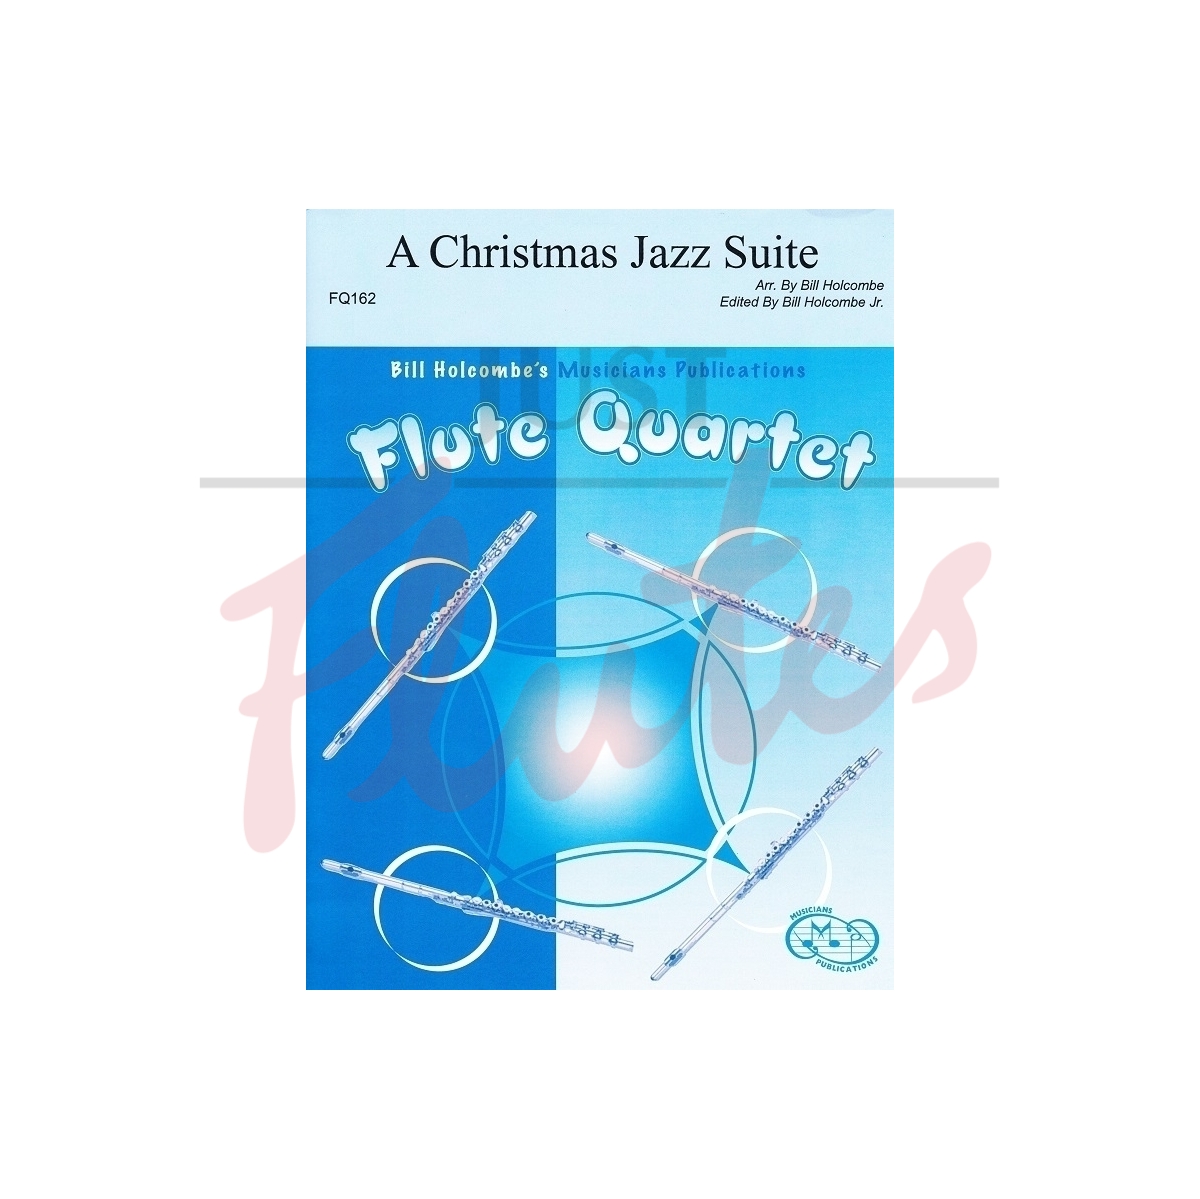 A Christmas Jazz Suite [Flute Quartet]